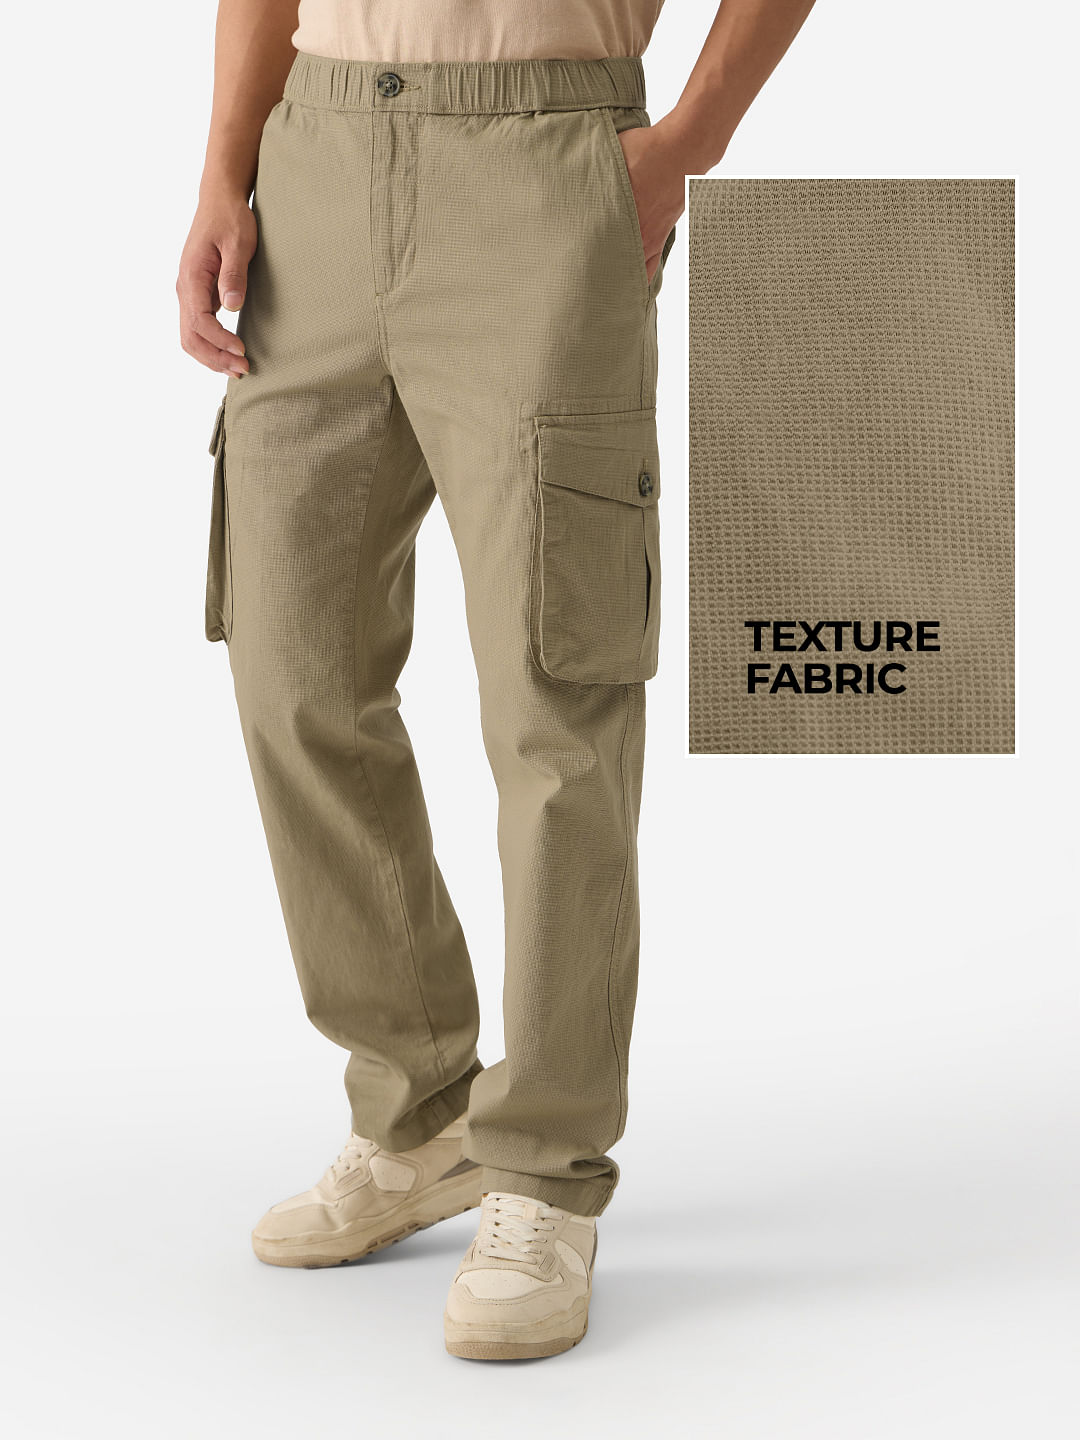 TAIAOJING Men's Cargo Pants Fashion Sports Casual Pants Elastic Waist  Straight Leg Loose Pants - Walmart.com